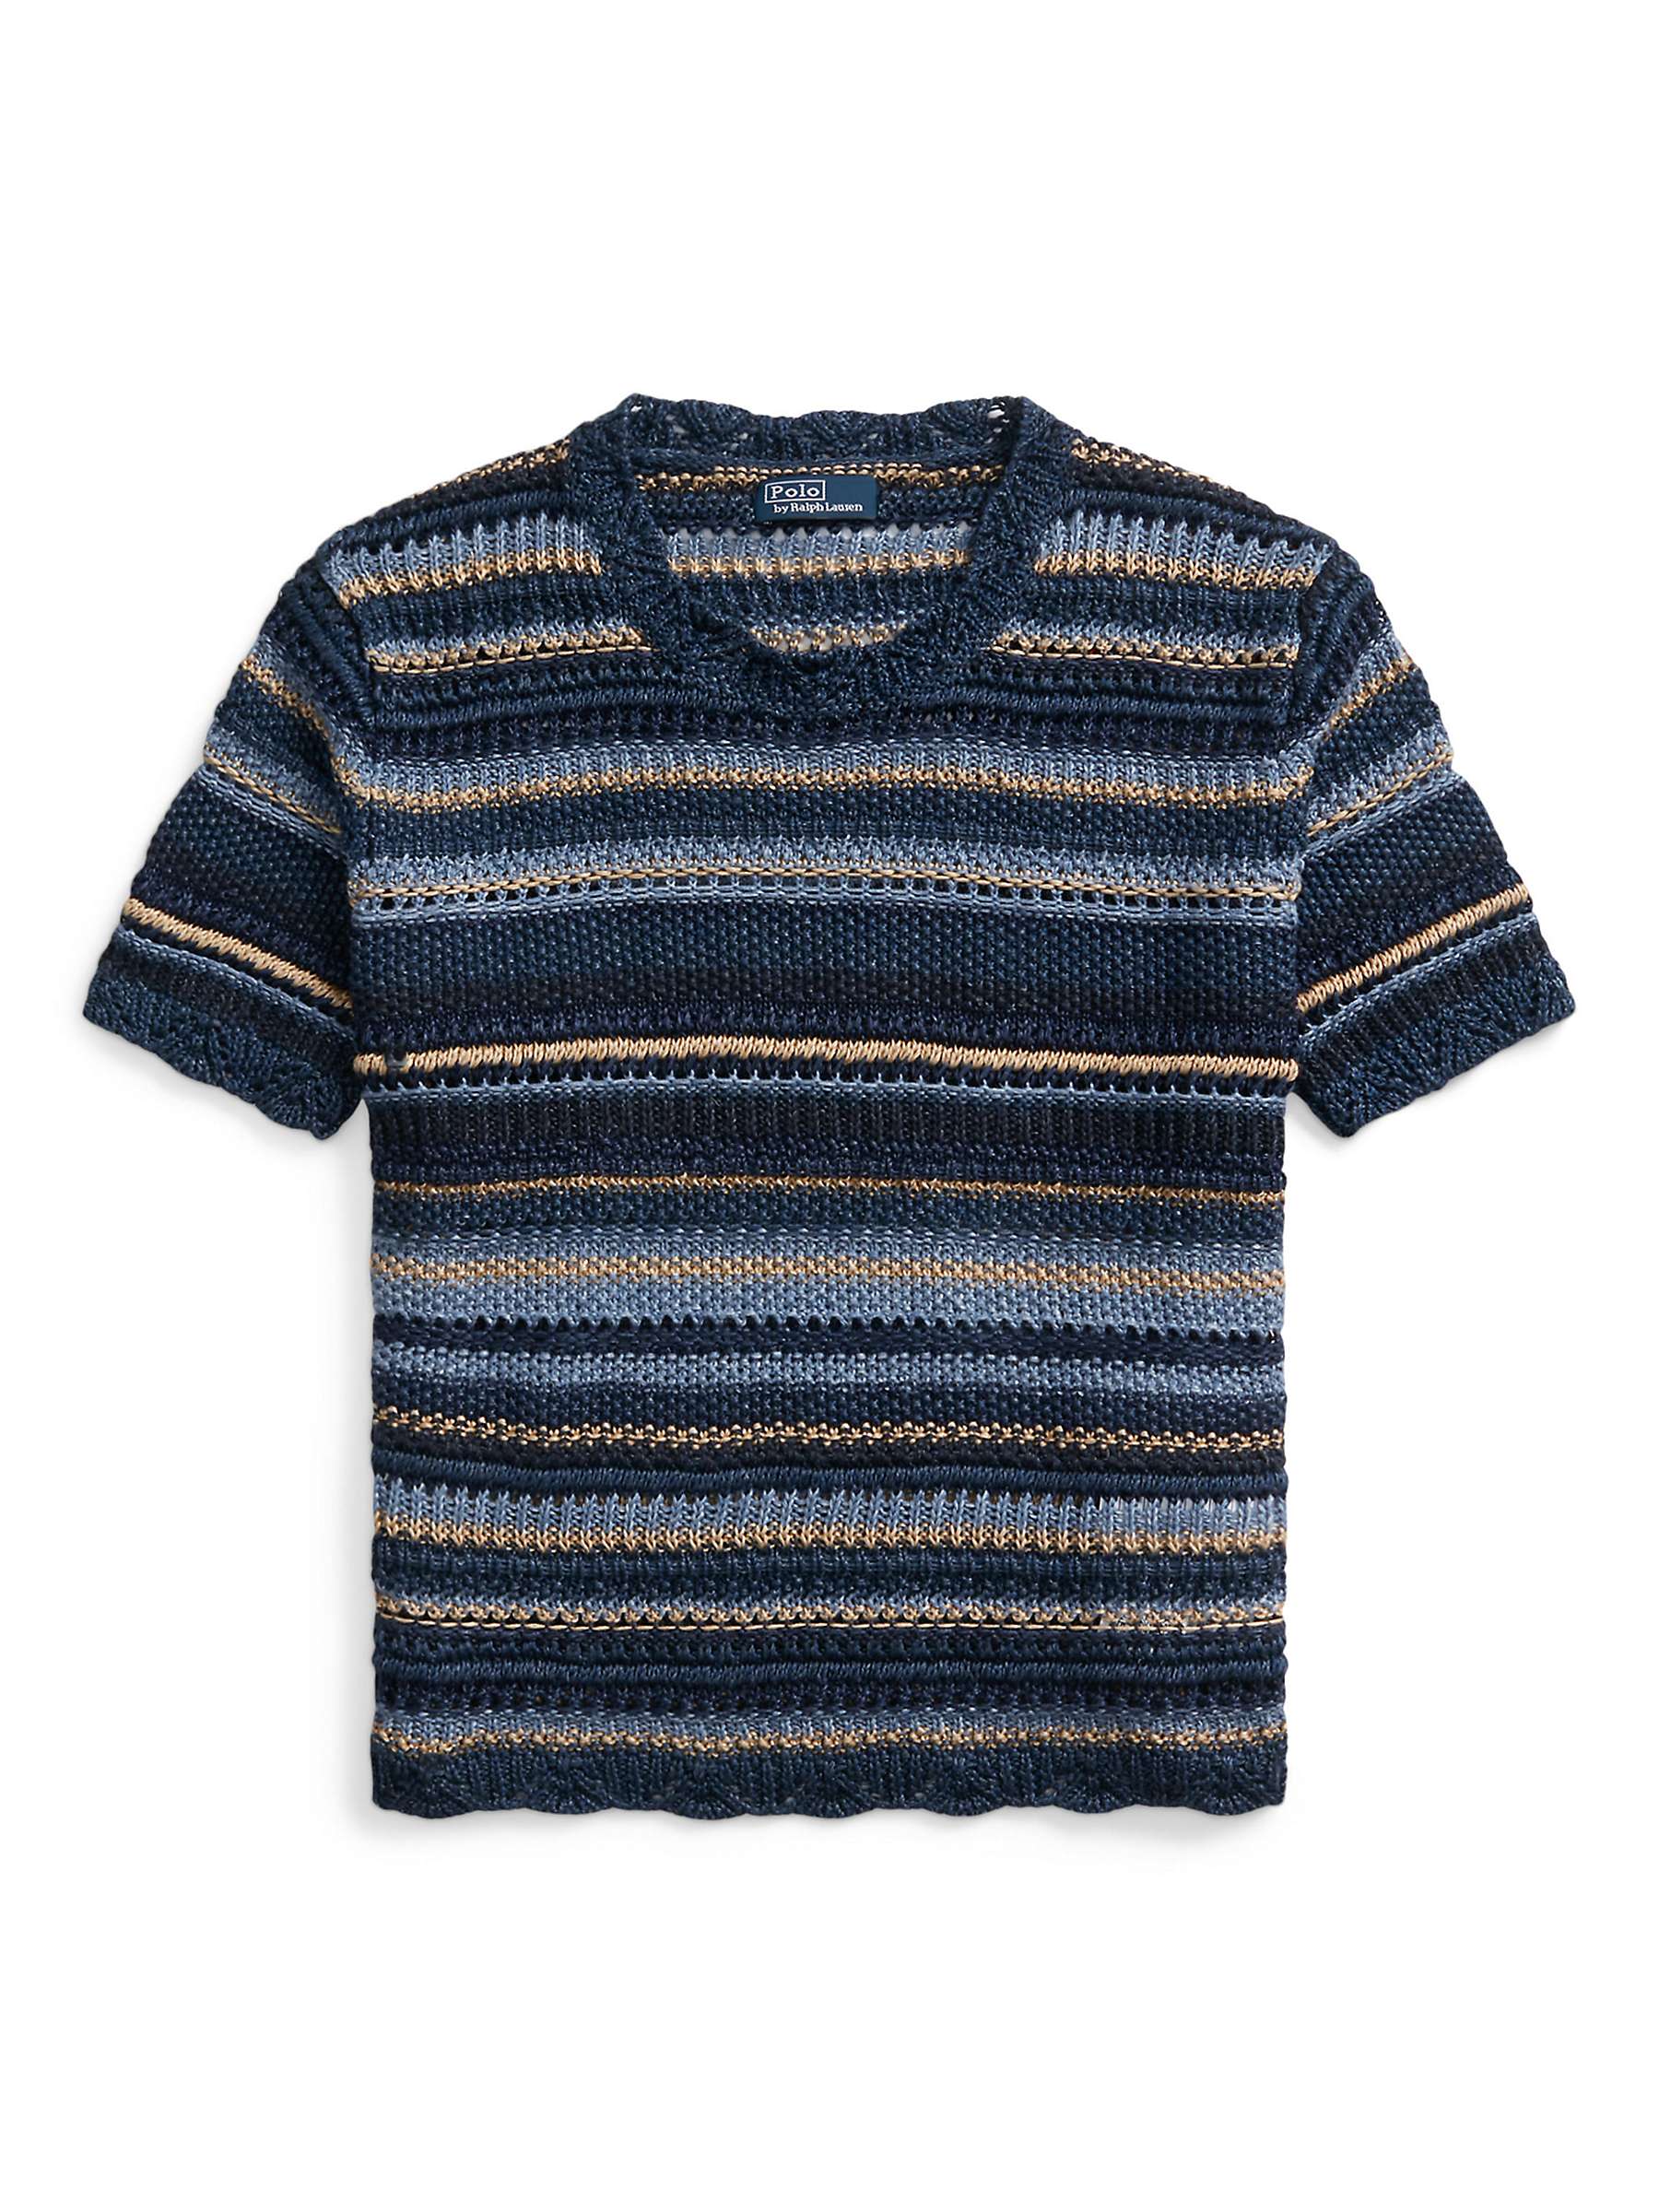 Buy Polo Ralph Lauren Stripe Crochet Knit Top, Blue/Multi Online at johnlewis.com